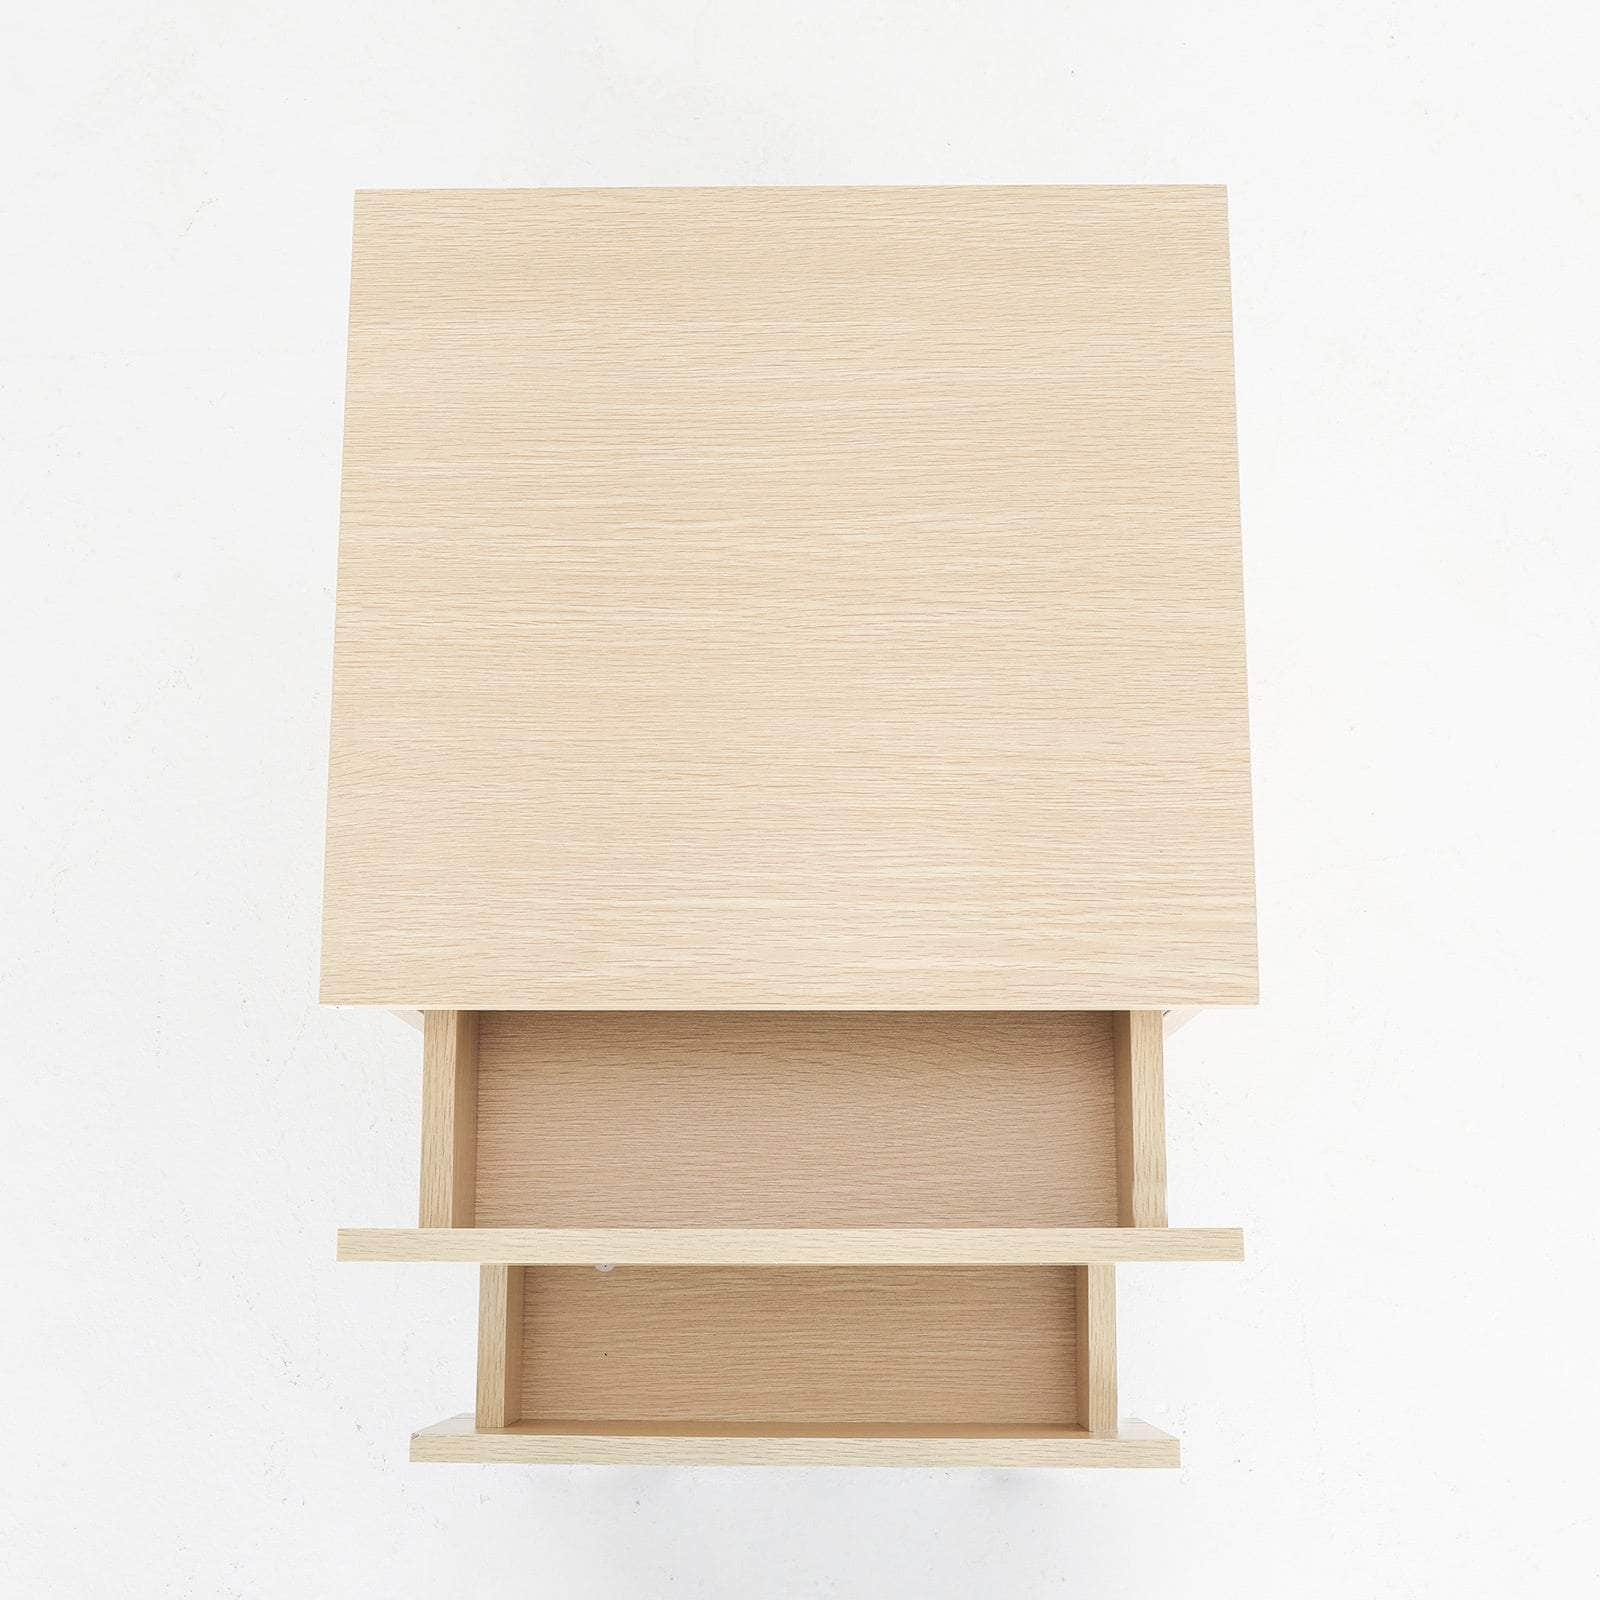 Joss Oak: Bedroom Nightstand With Two Convenient Drawers